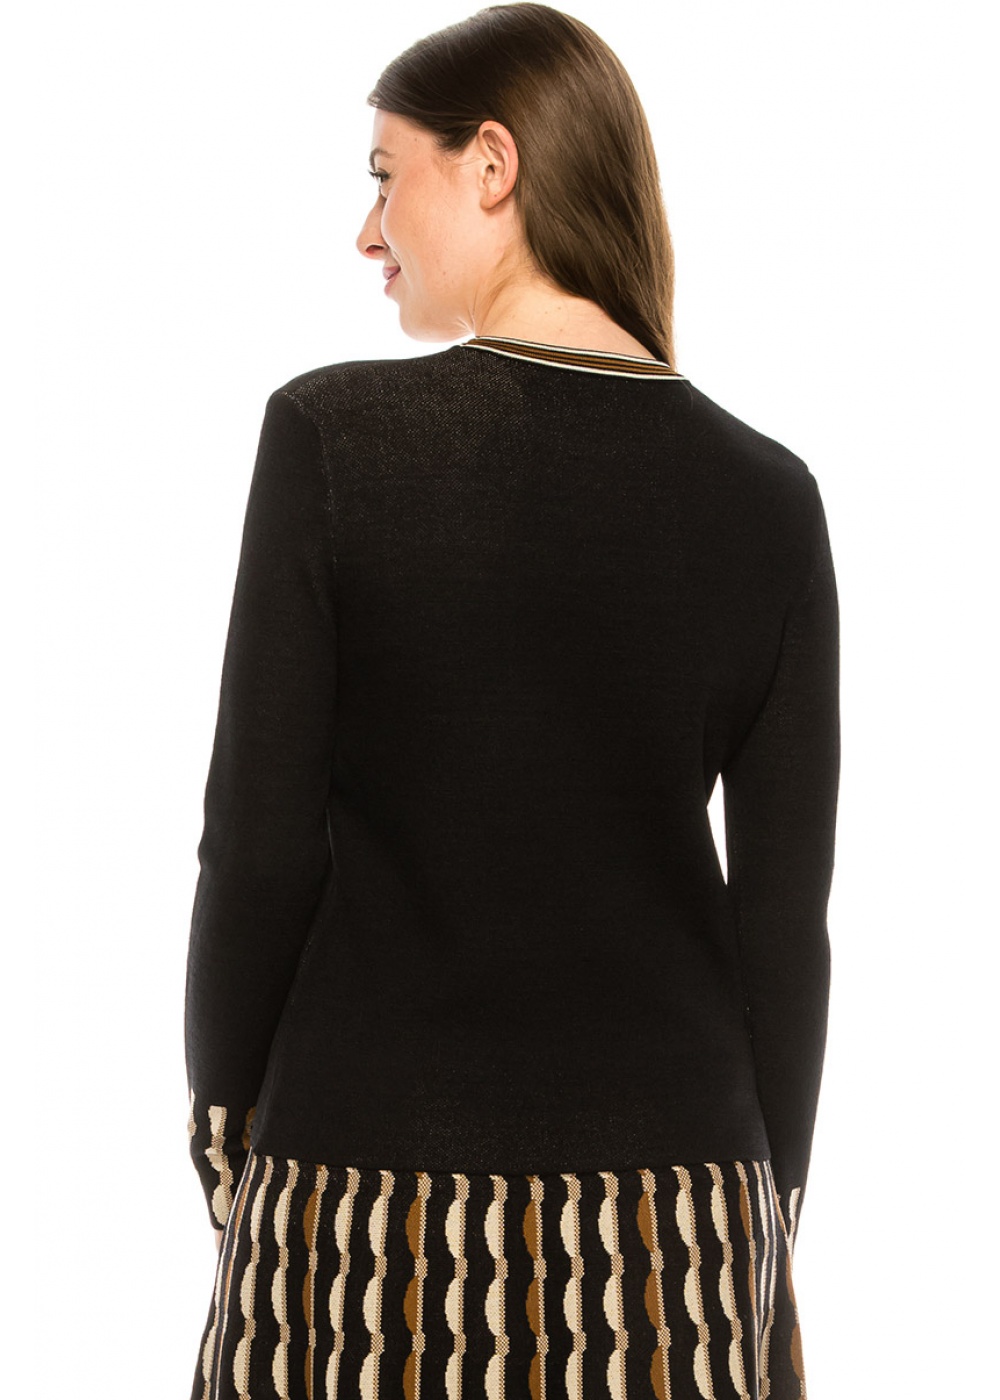 Sweater KA151-Black